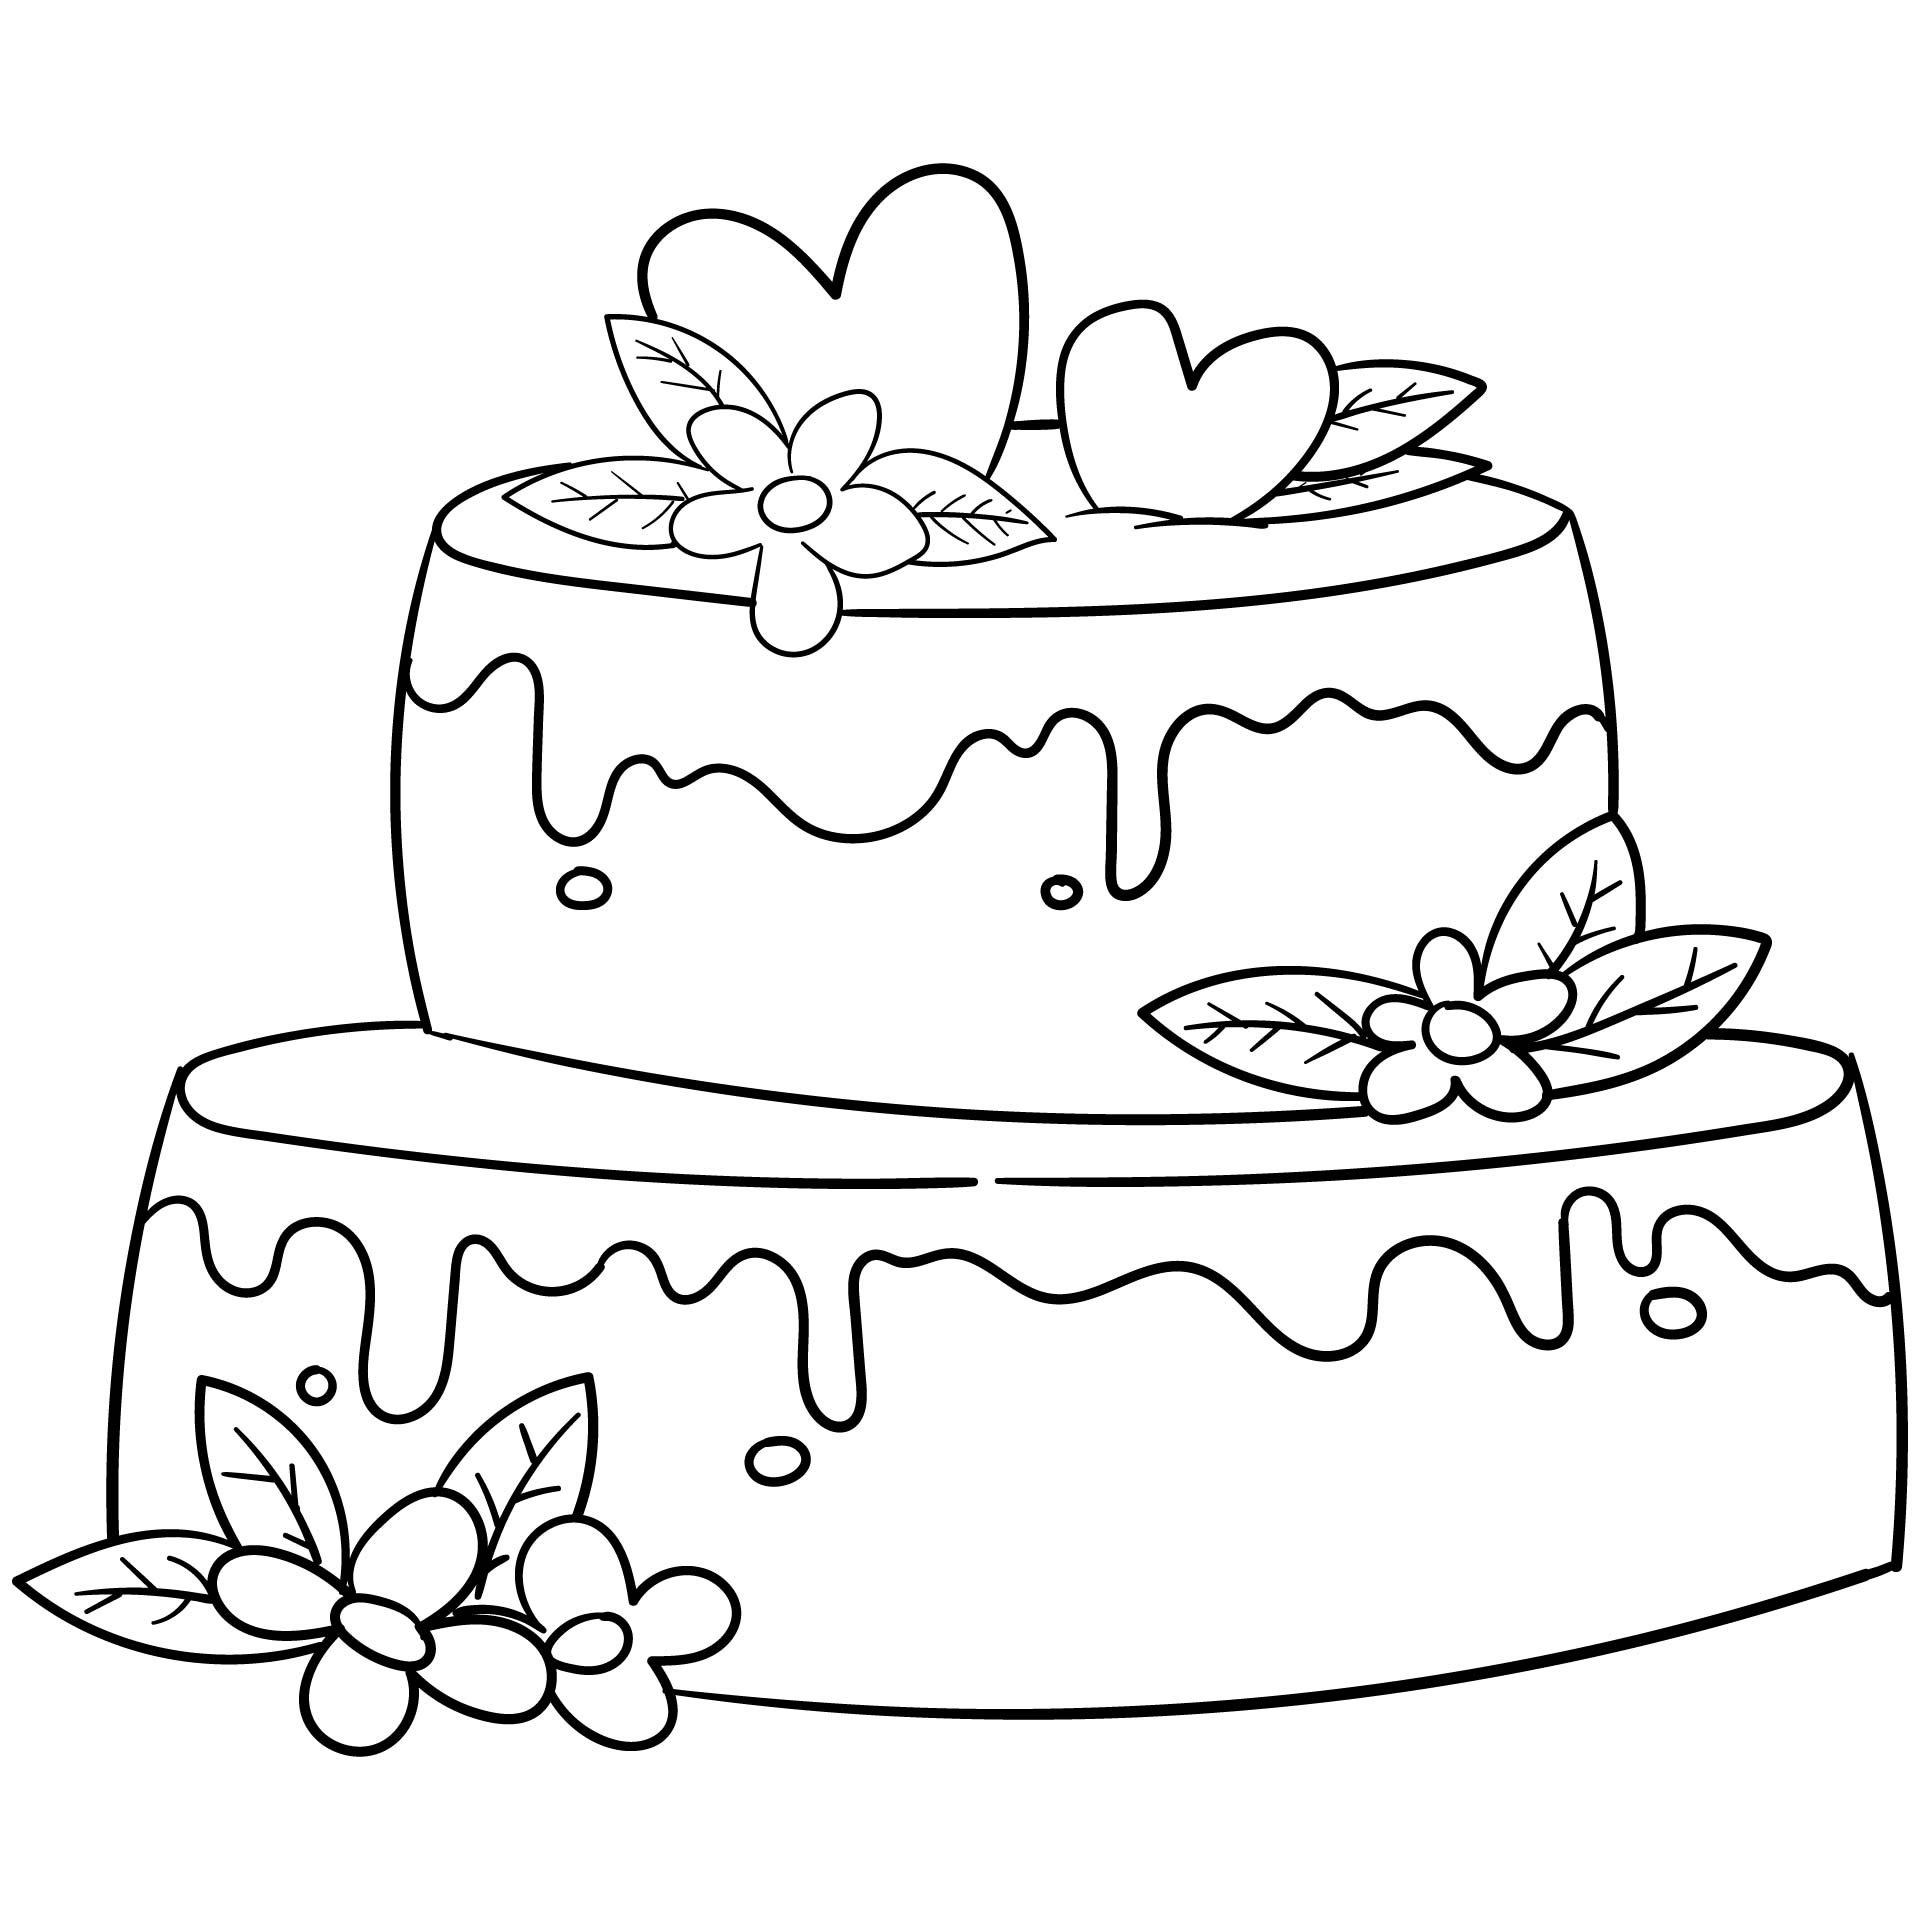 Cake Serving Chart 5.28.16